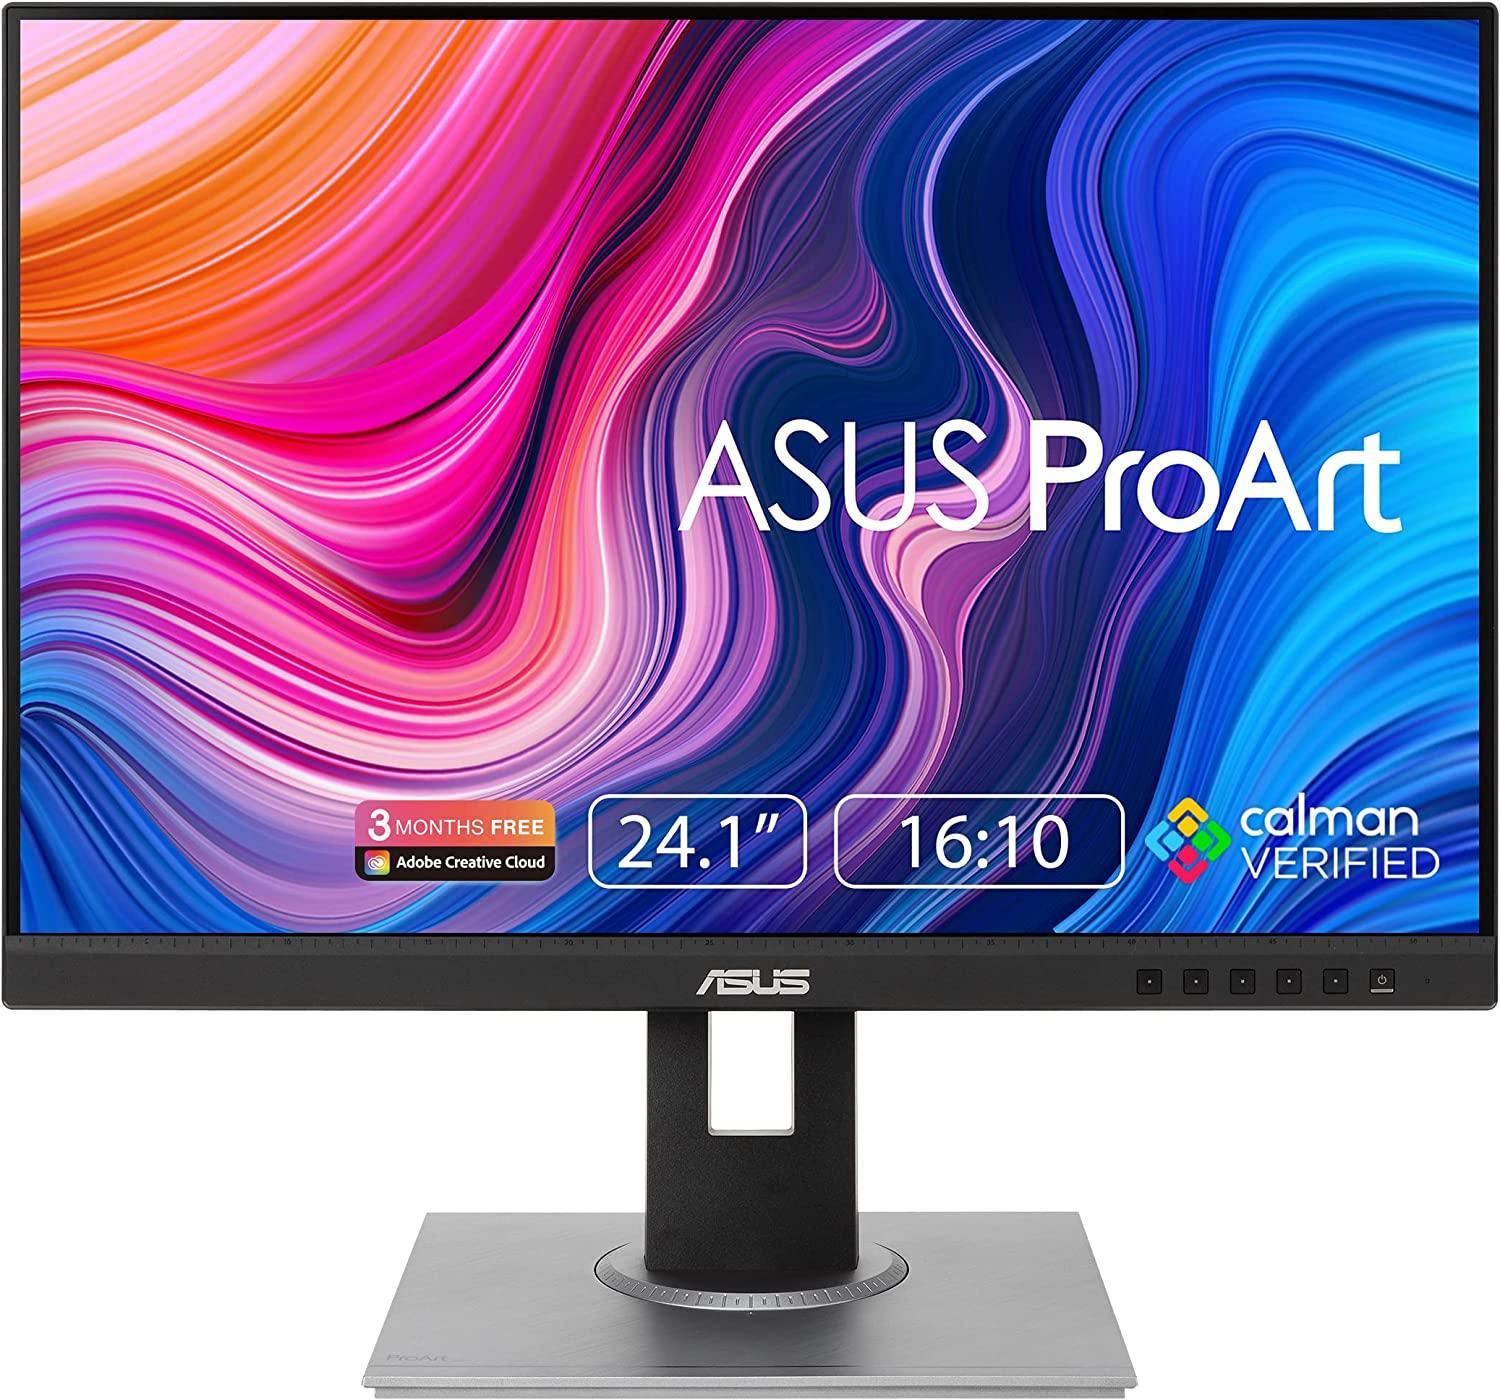 ASUS ProArt Display PA248QV 24.1” WUXGA (1920 x 1200) 16:10 Monitor, 100% sRGB/Rec.709 ΔE < 2, IPS, DisplayPort HDMI D-Sub, Calman Verified, Anti-glare, Tilt Pivot Swivel Height Adjustable, Black